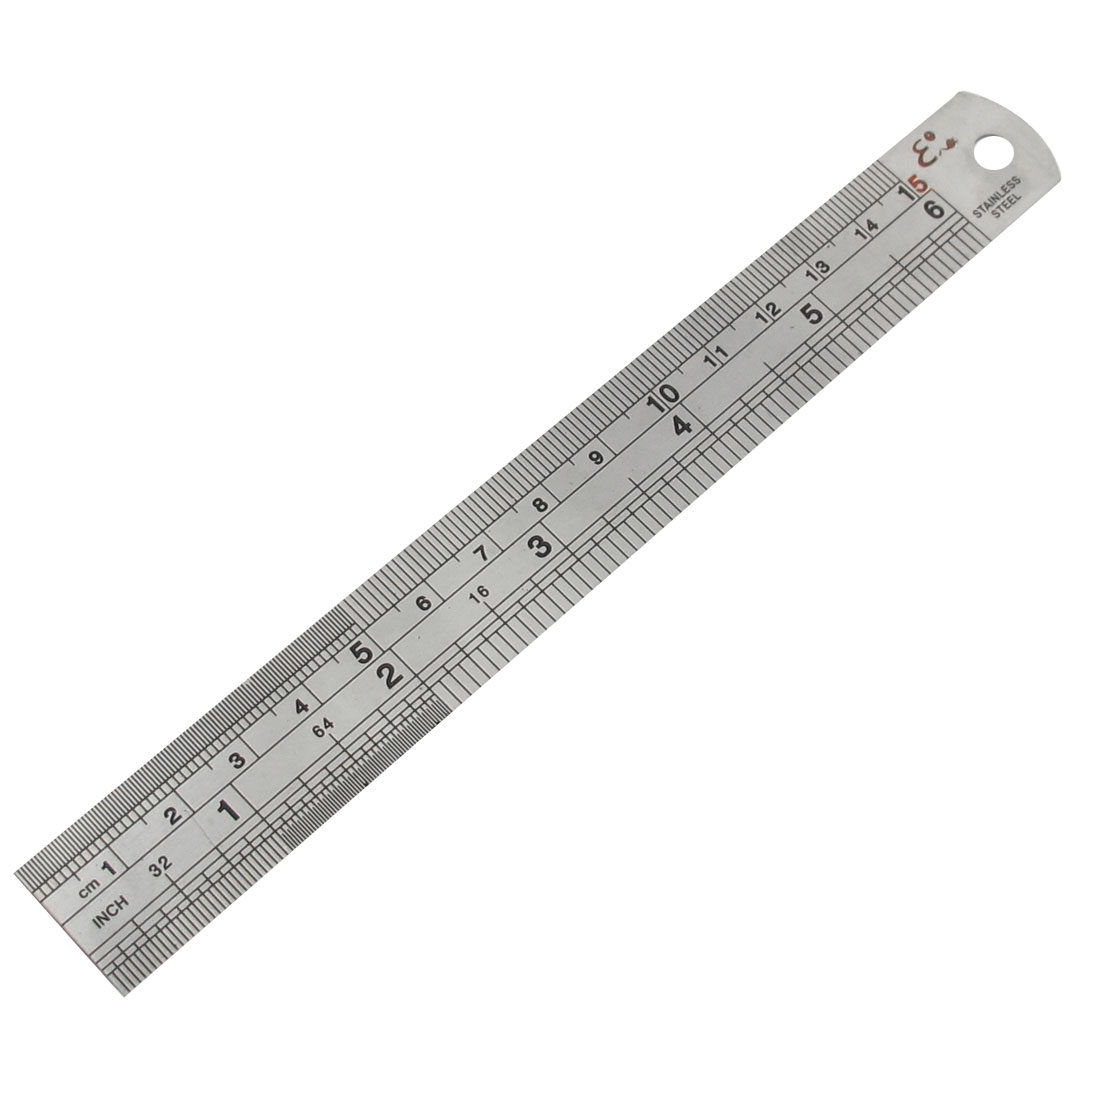 printable ruler actual size